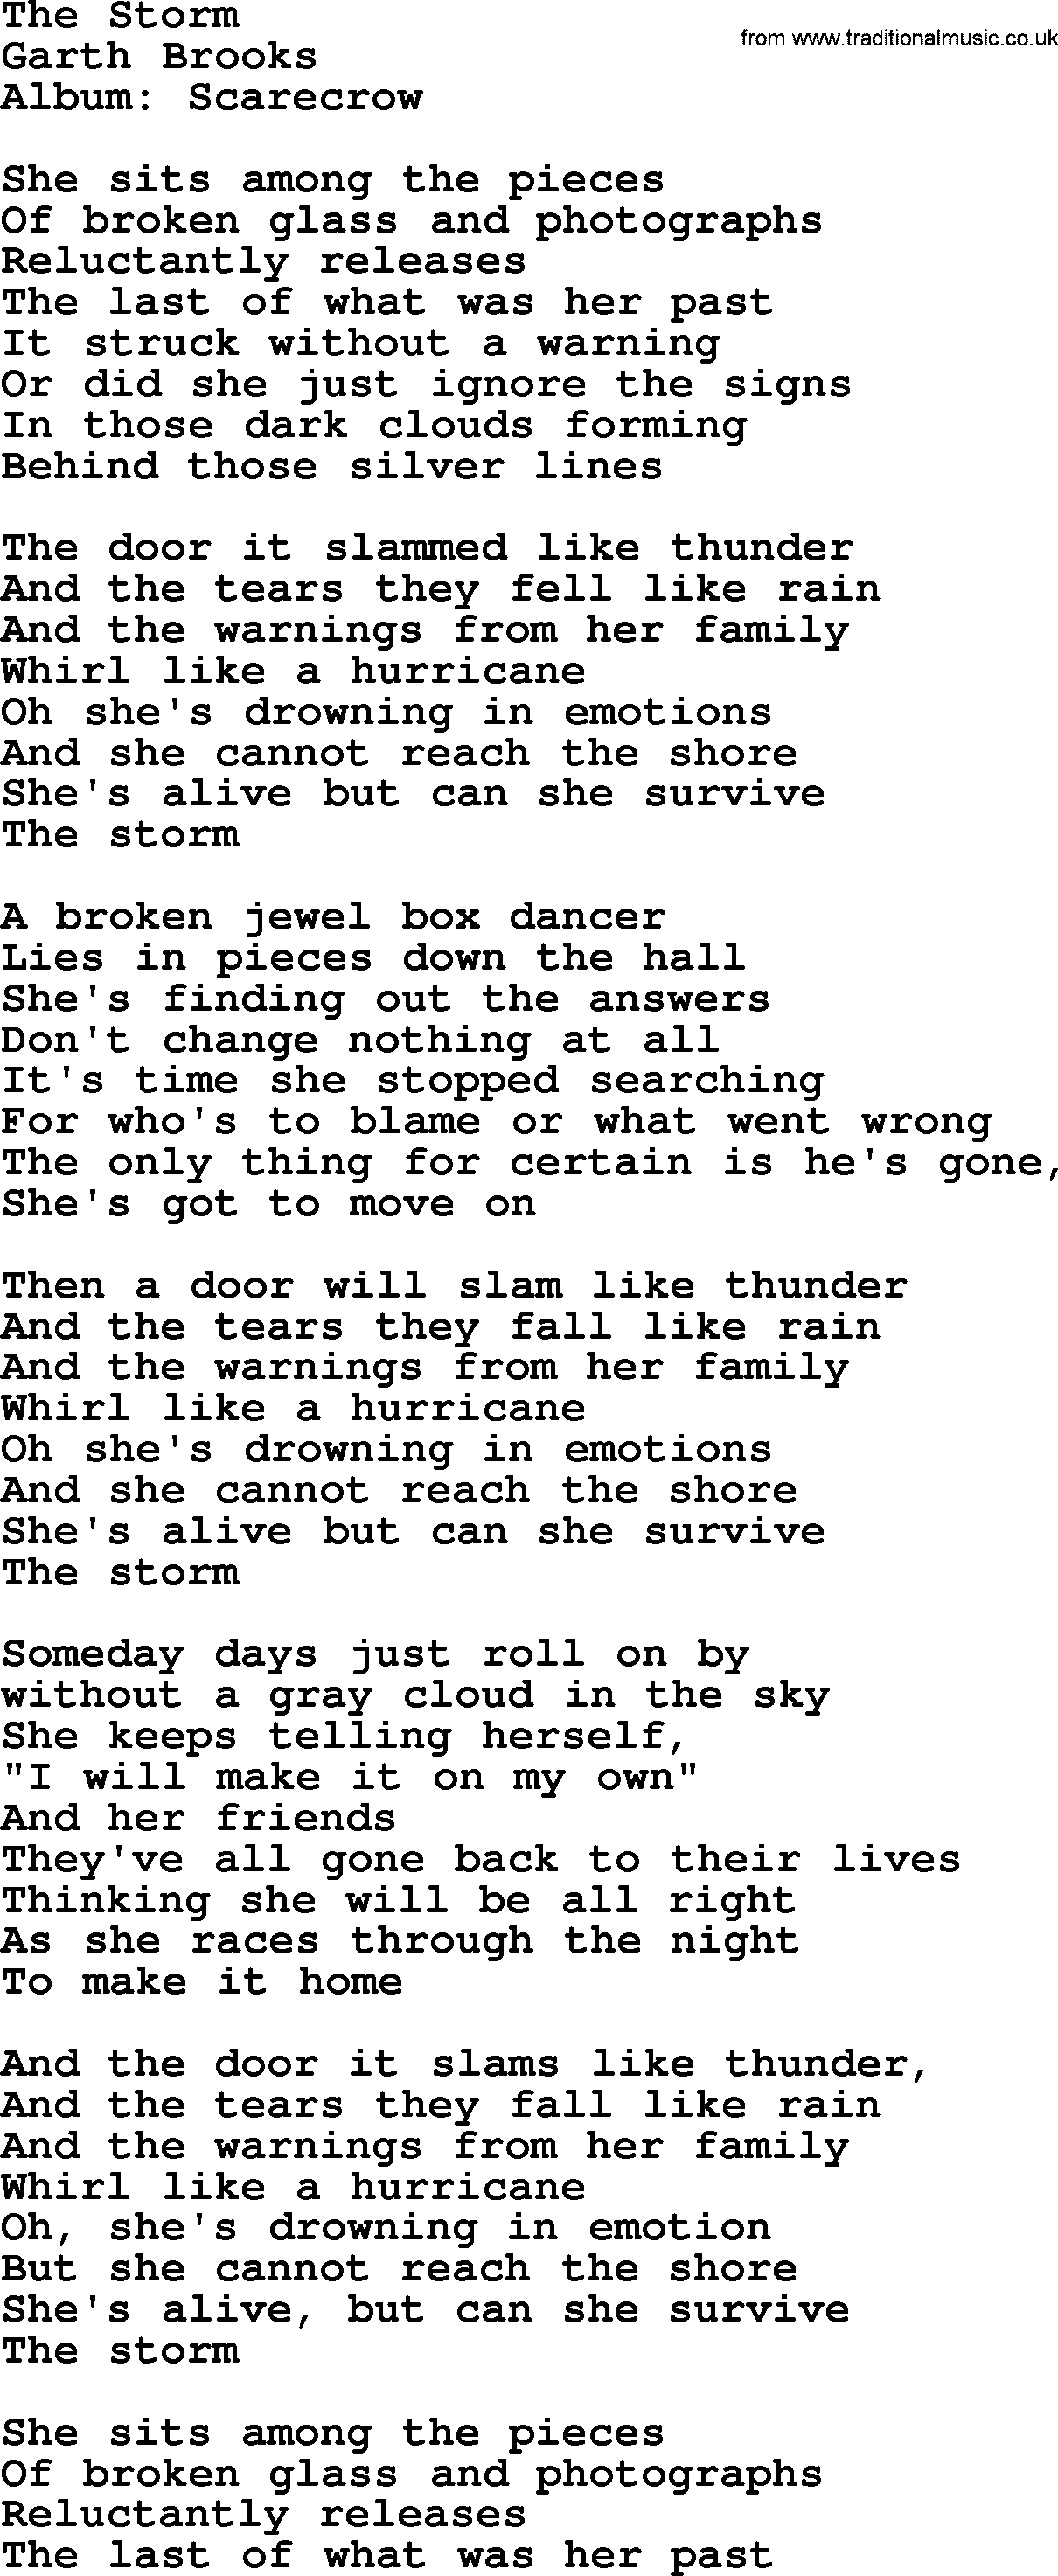 Garth Brooks song: The Storm, lyrics